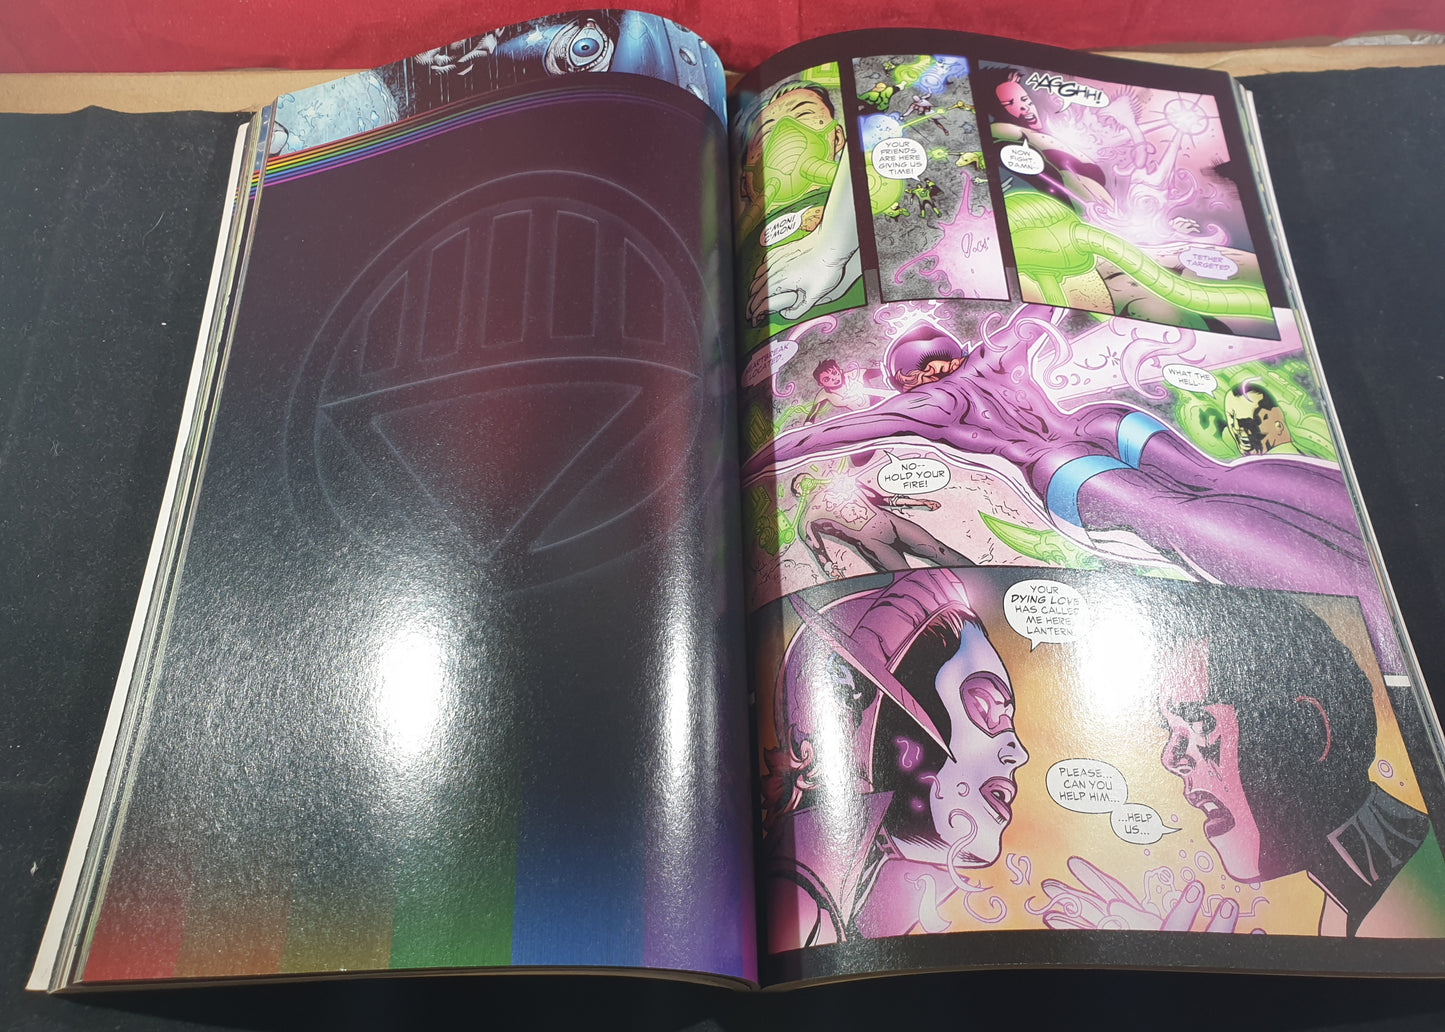 Green Lantern Corps Blackest Night Comic Book